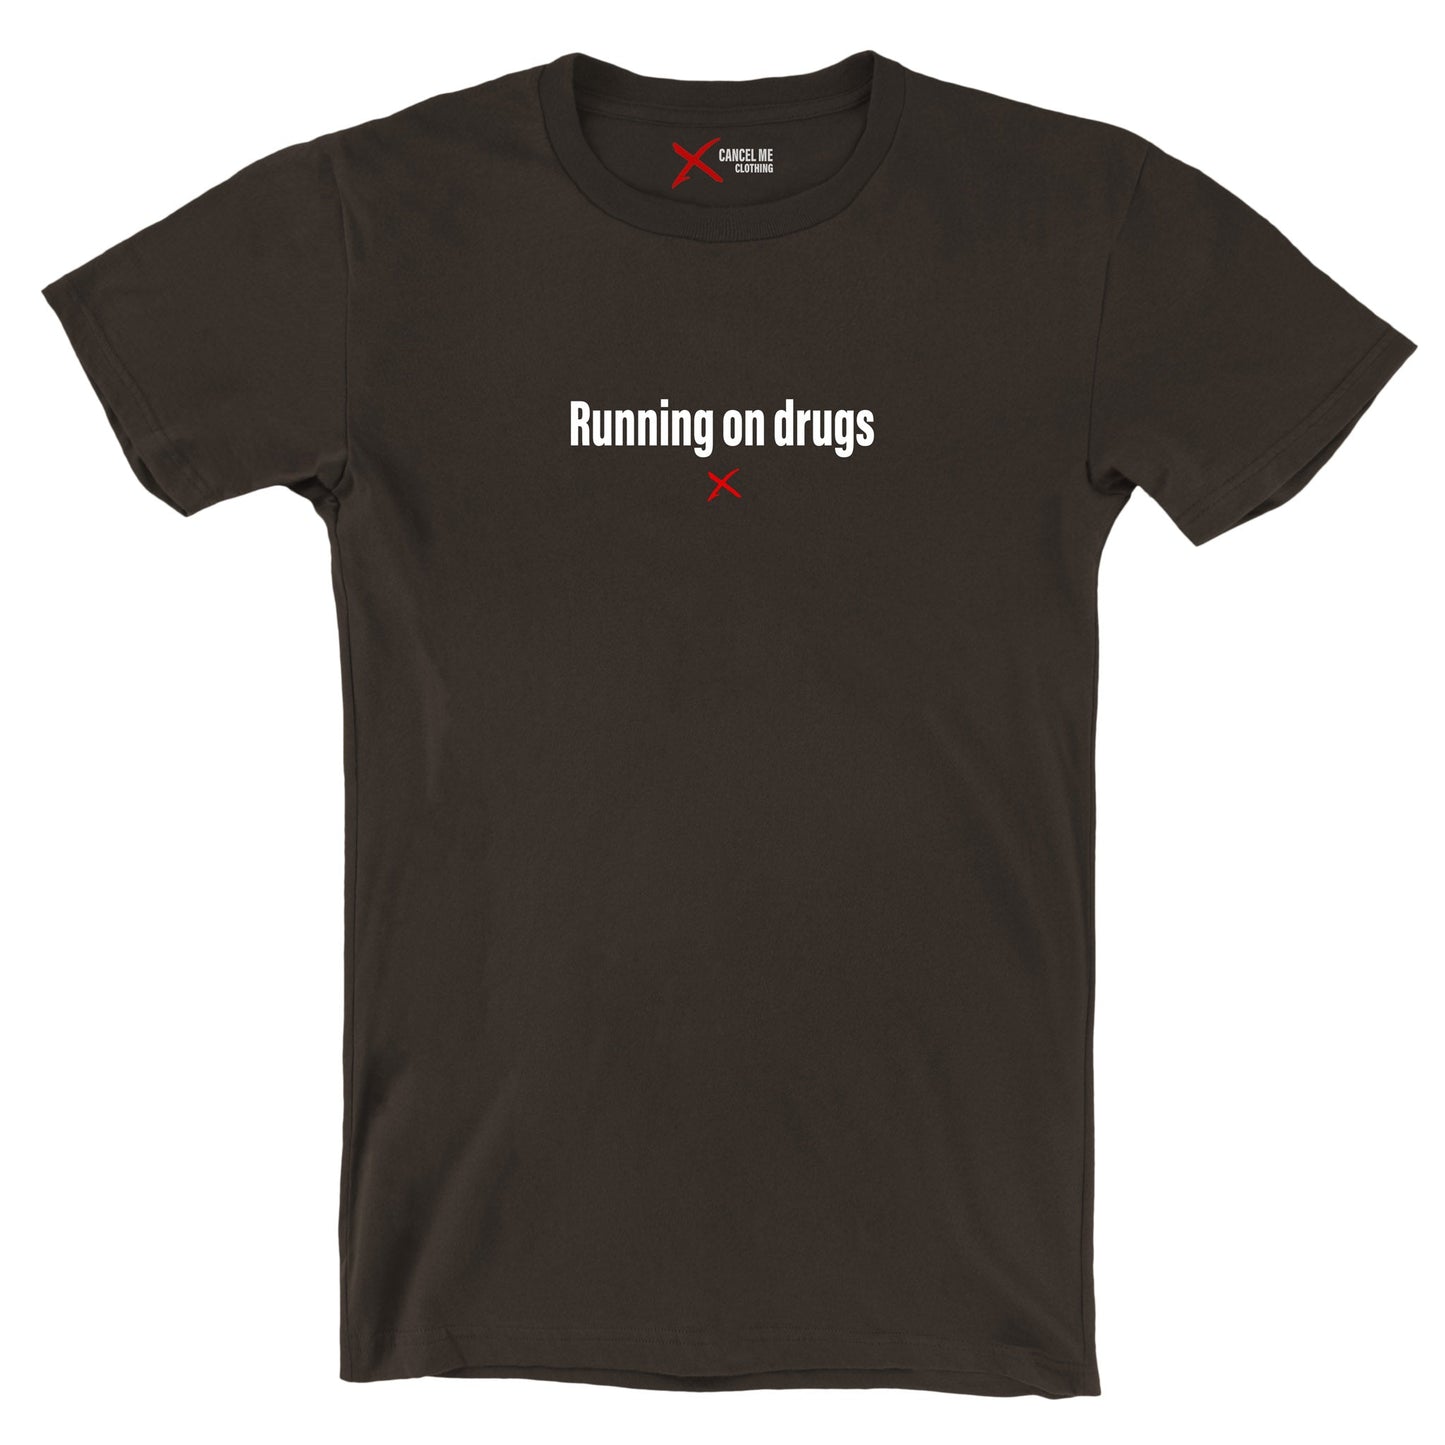 Running on drugs - Shirt